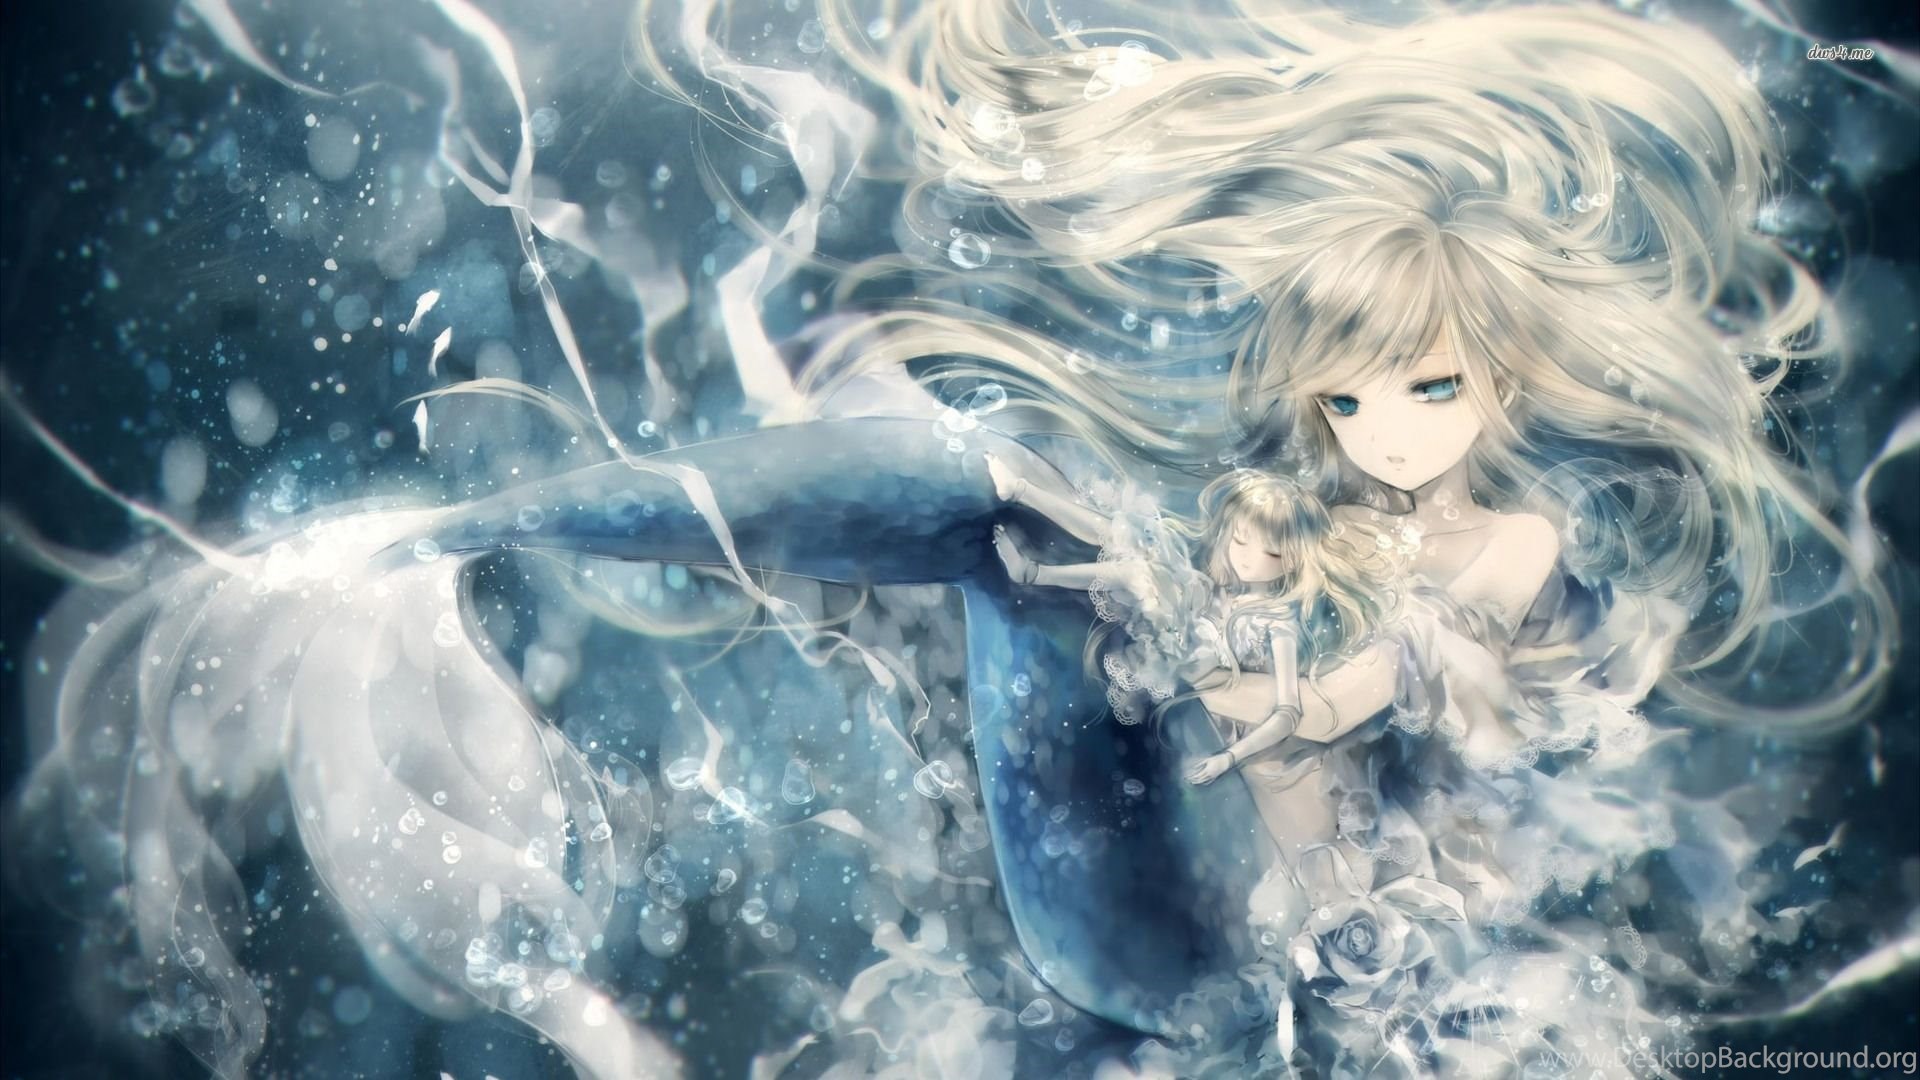 Lihat Sad Mermaid Wallpapers Anime Desktop Background Popular